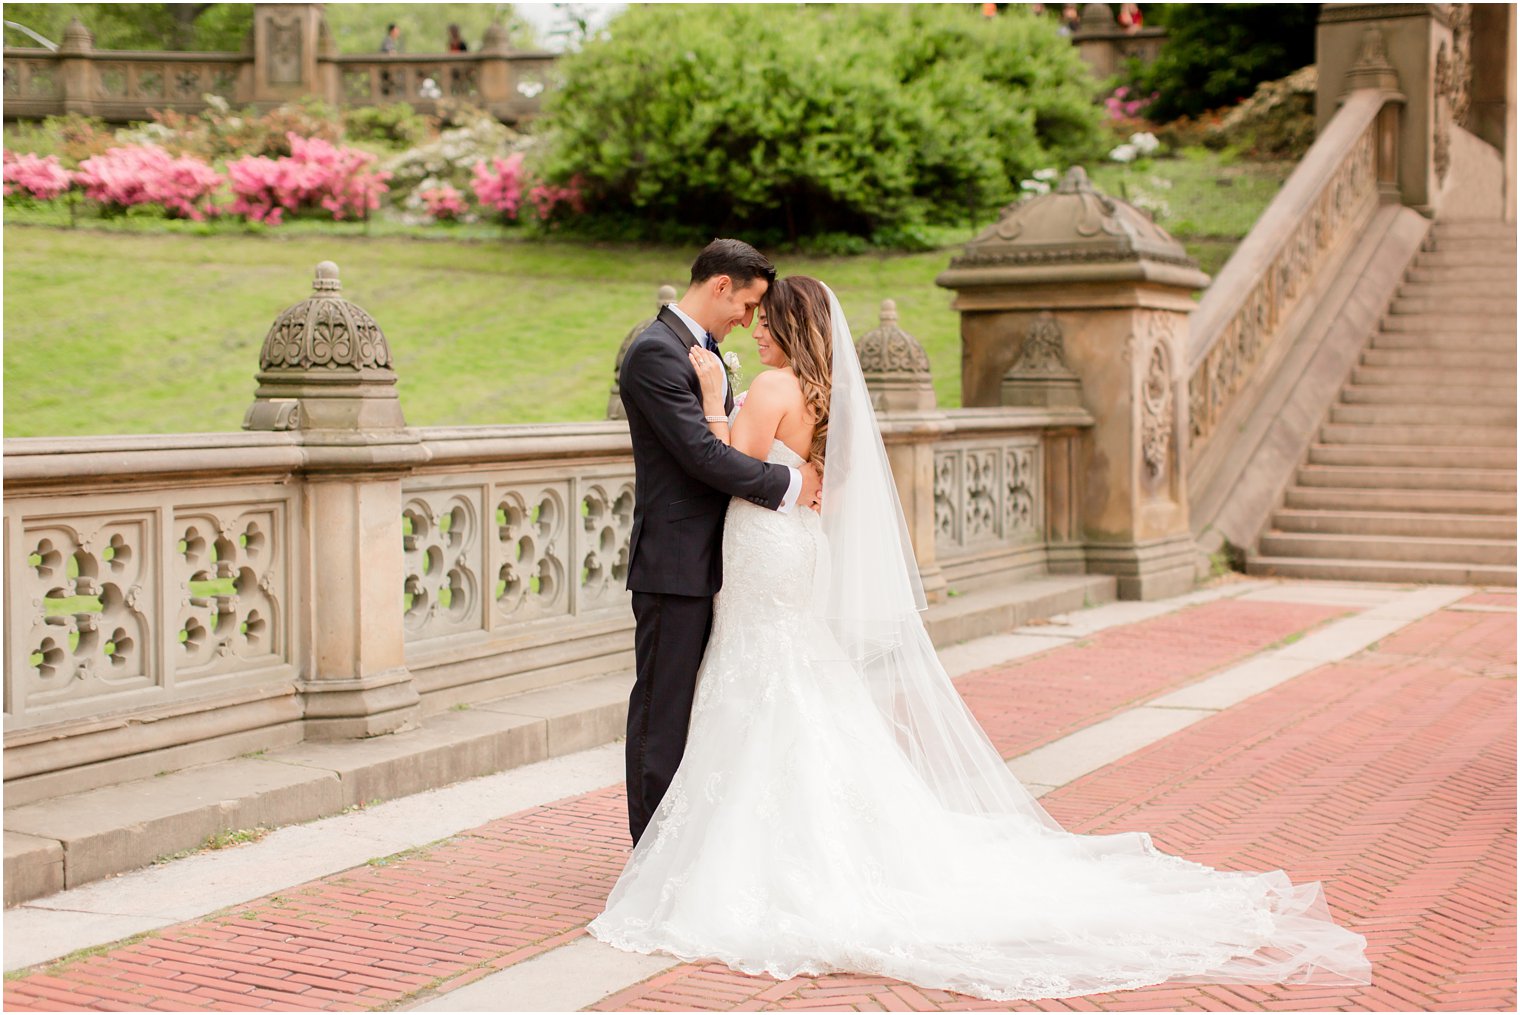 Romantic wedding photo in Central Park | Photo by Idalia Photography